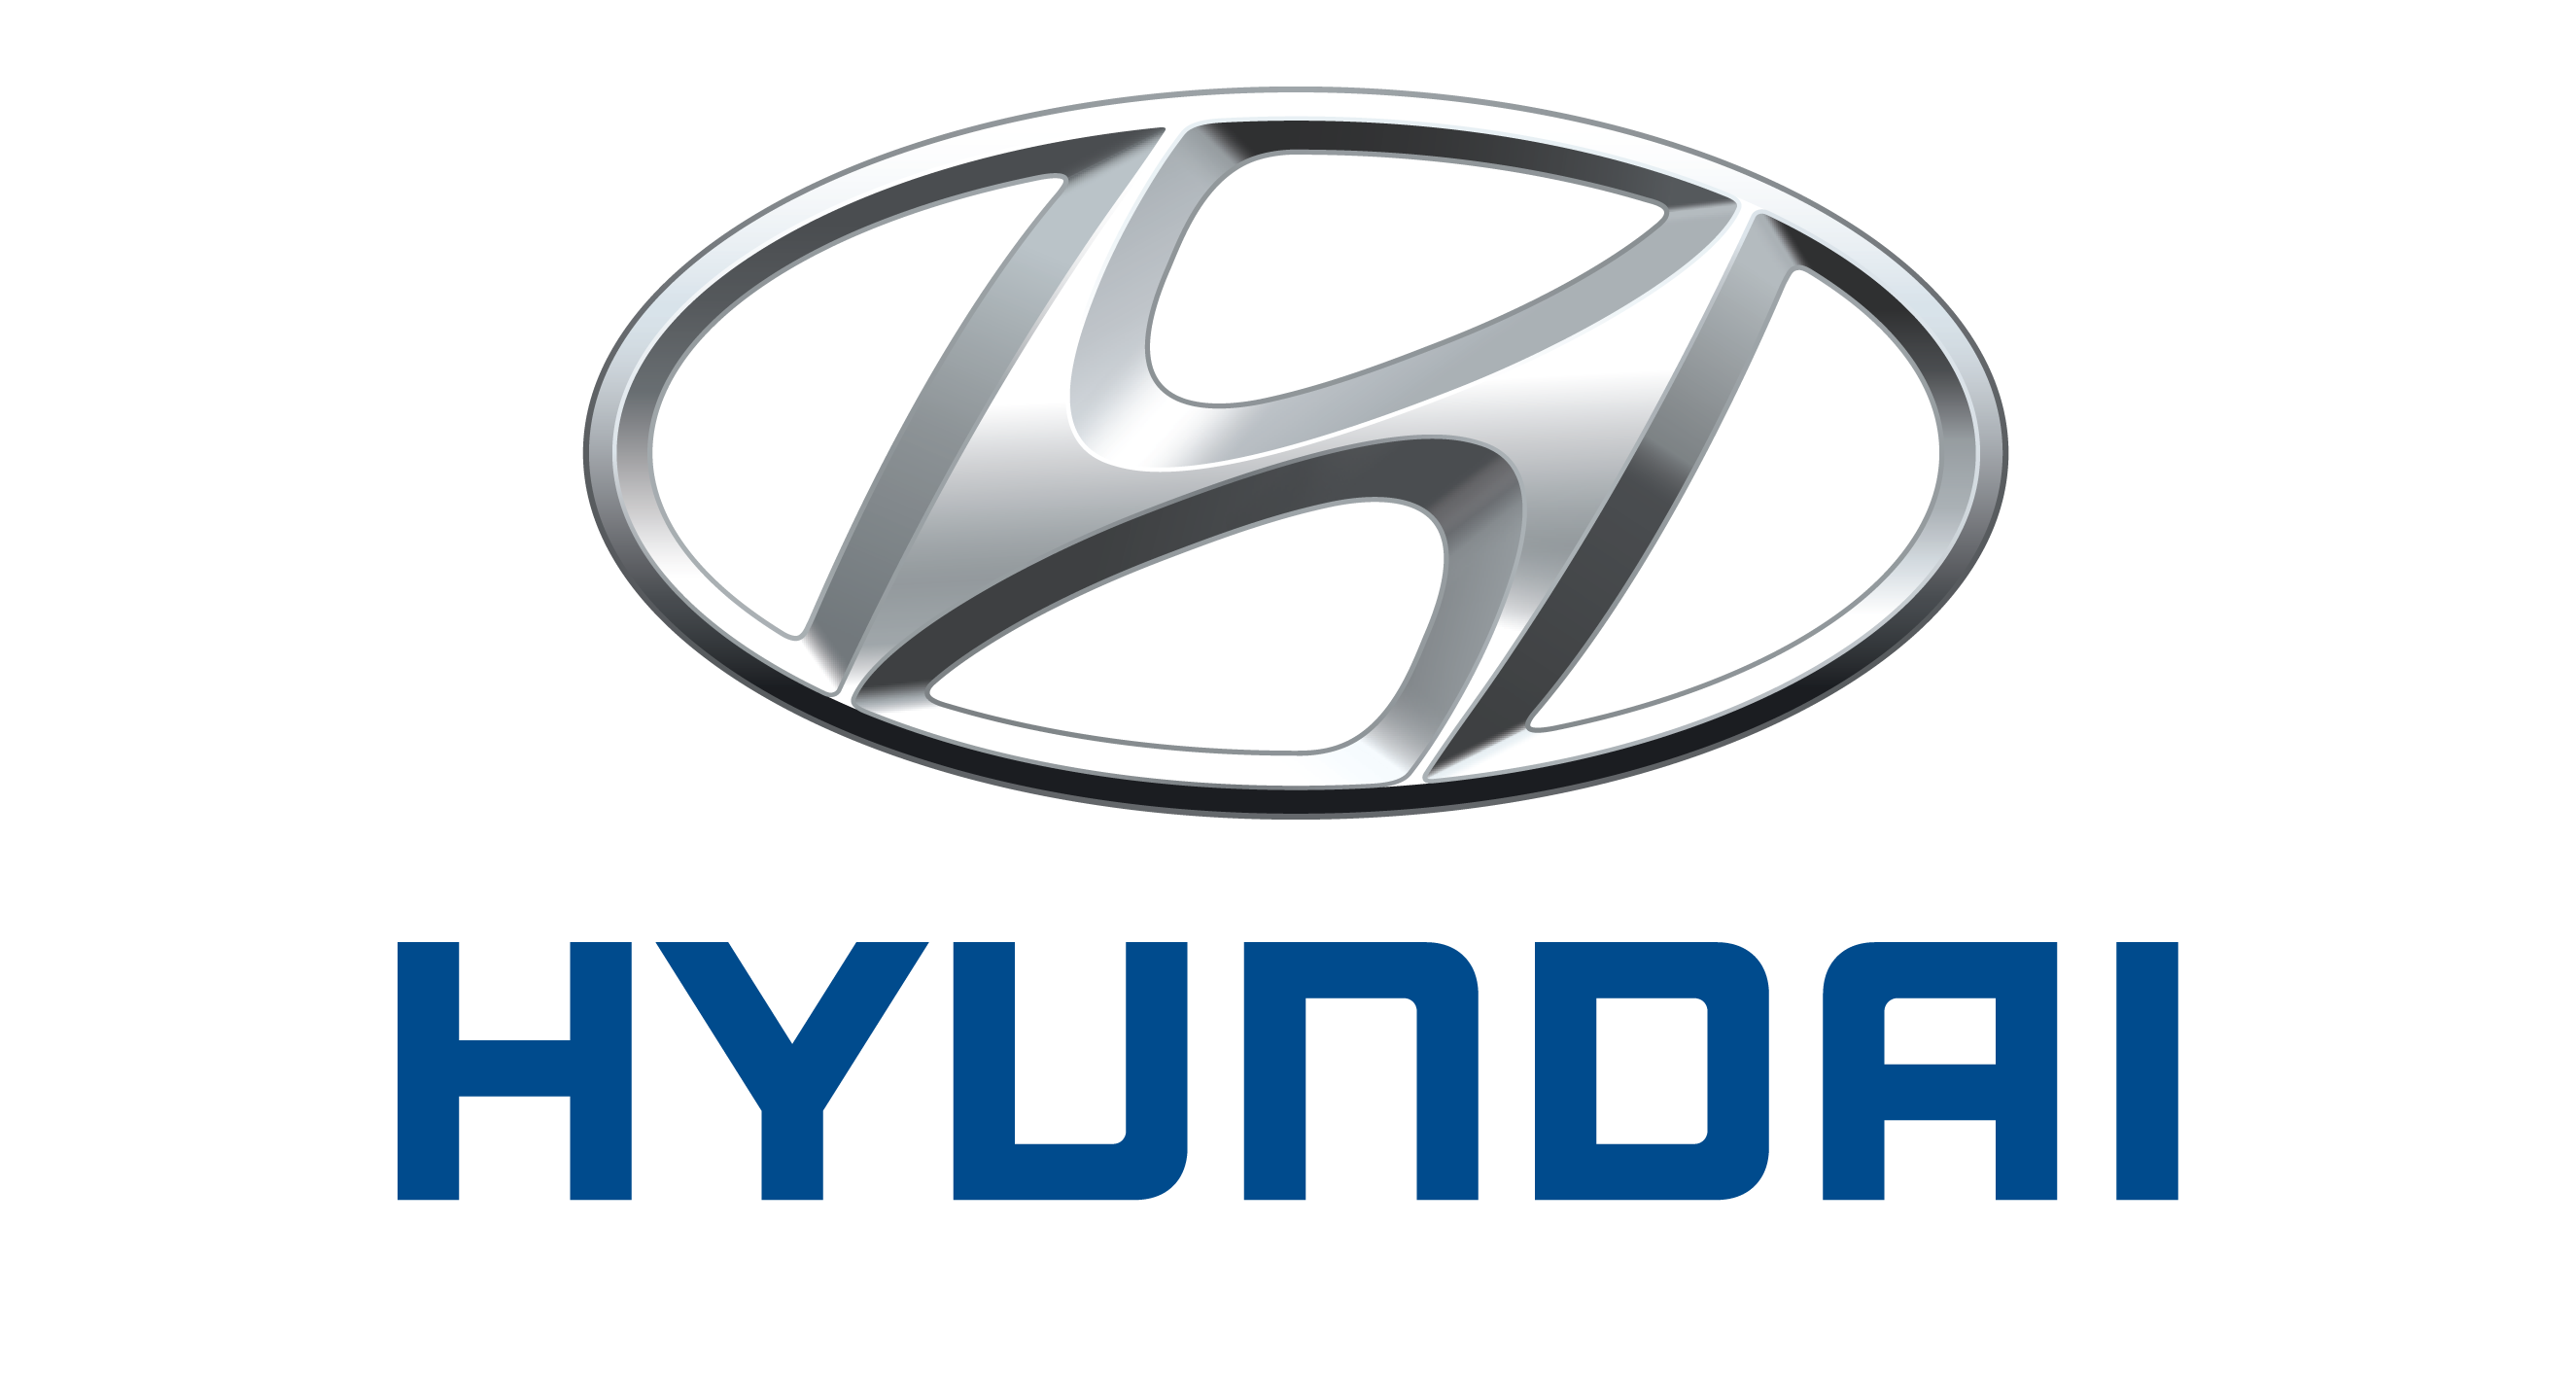 Hyundai-logo-silver-2560x1440